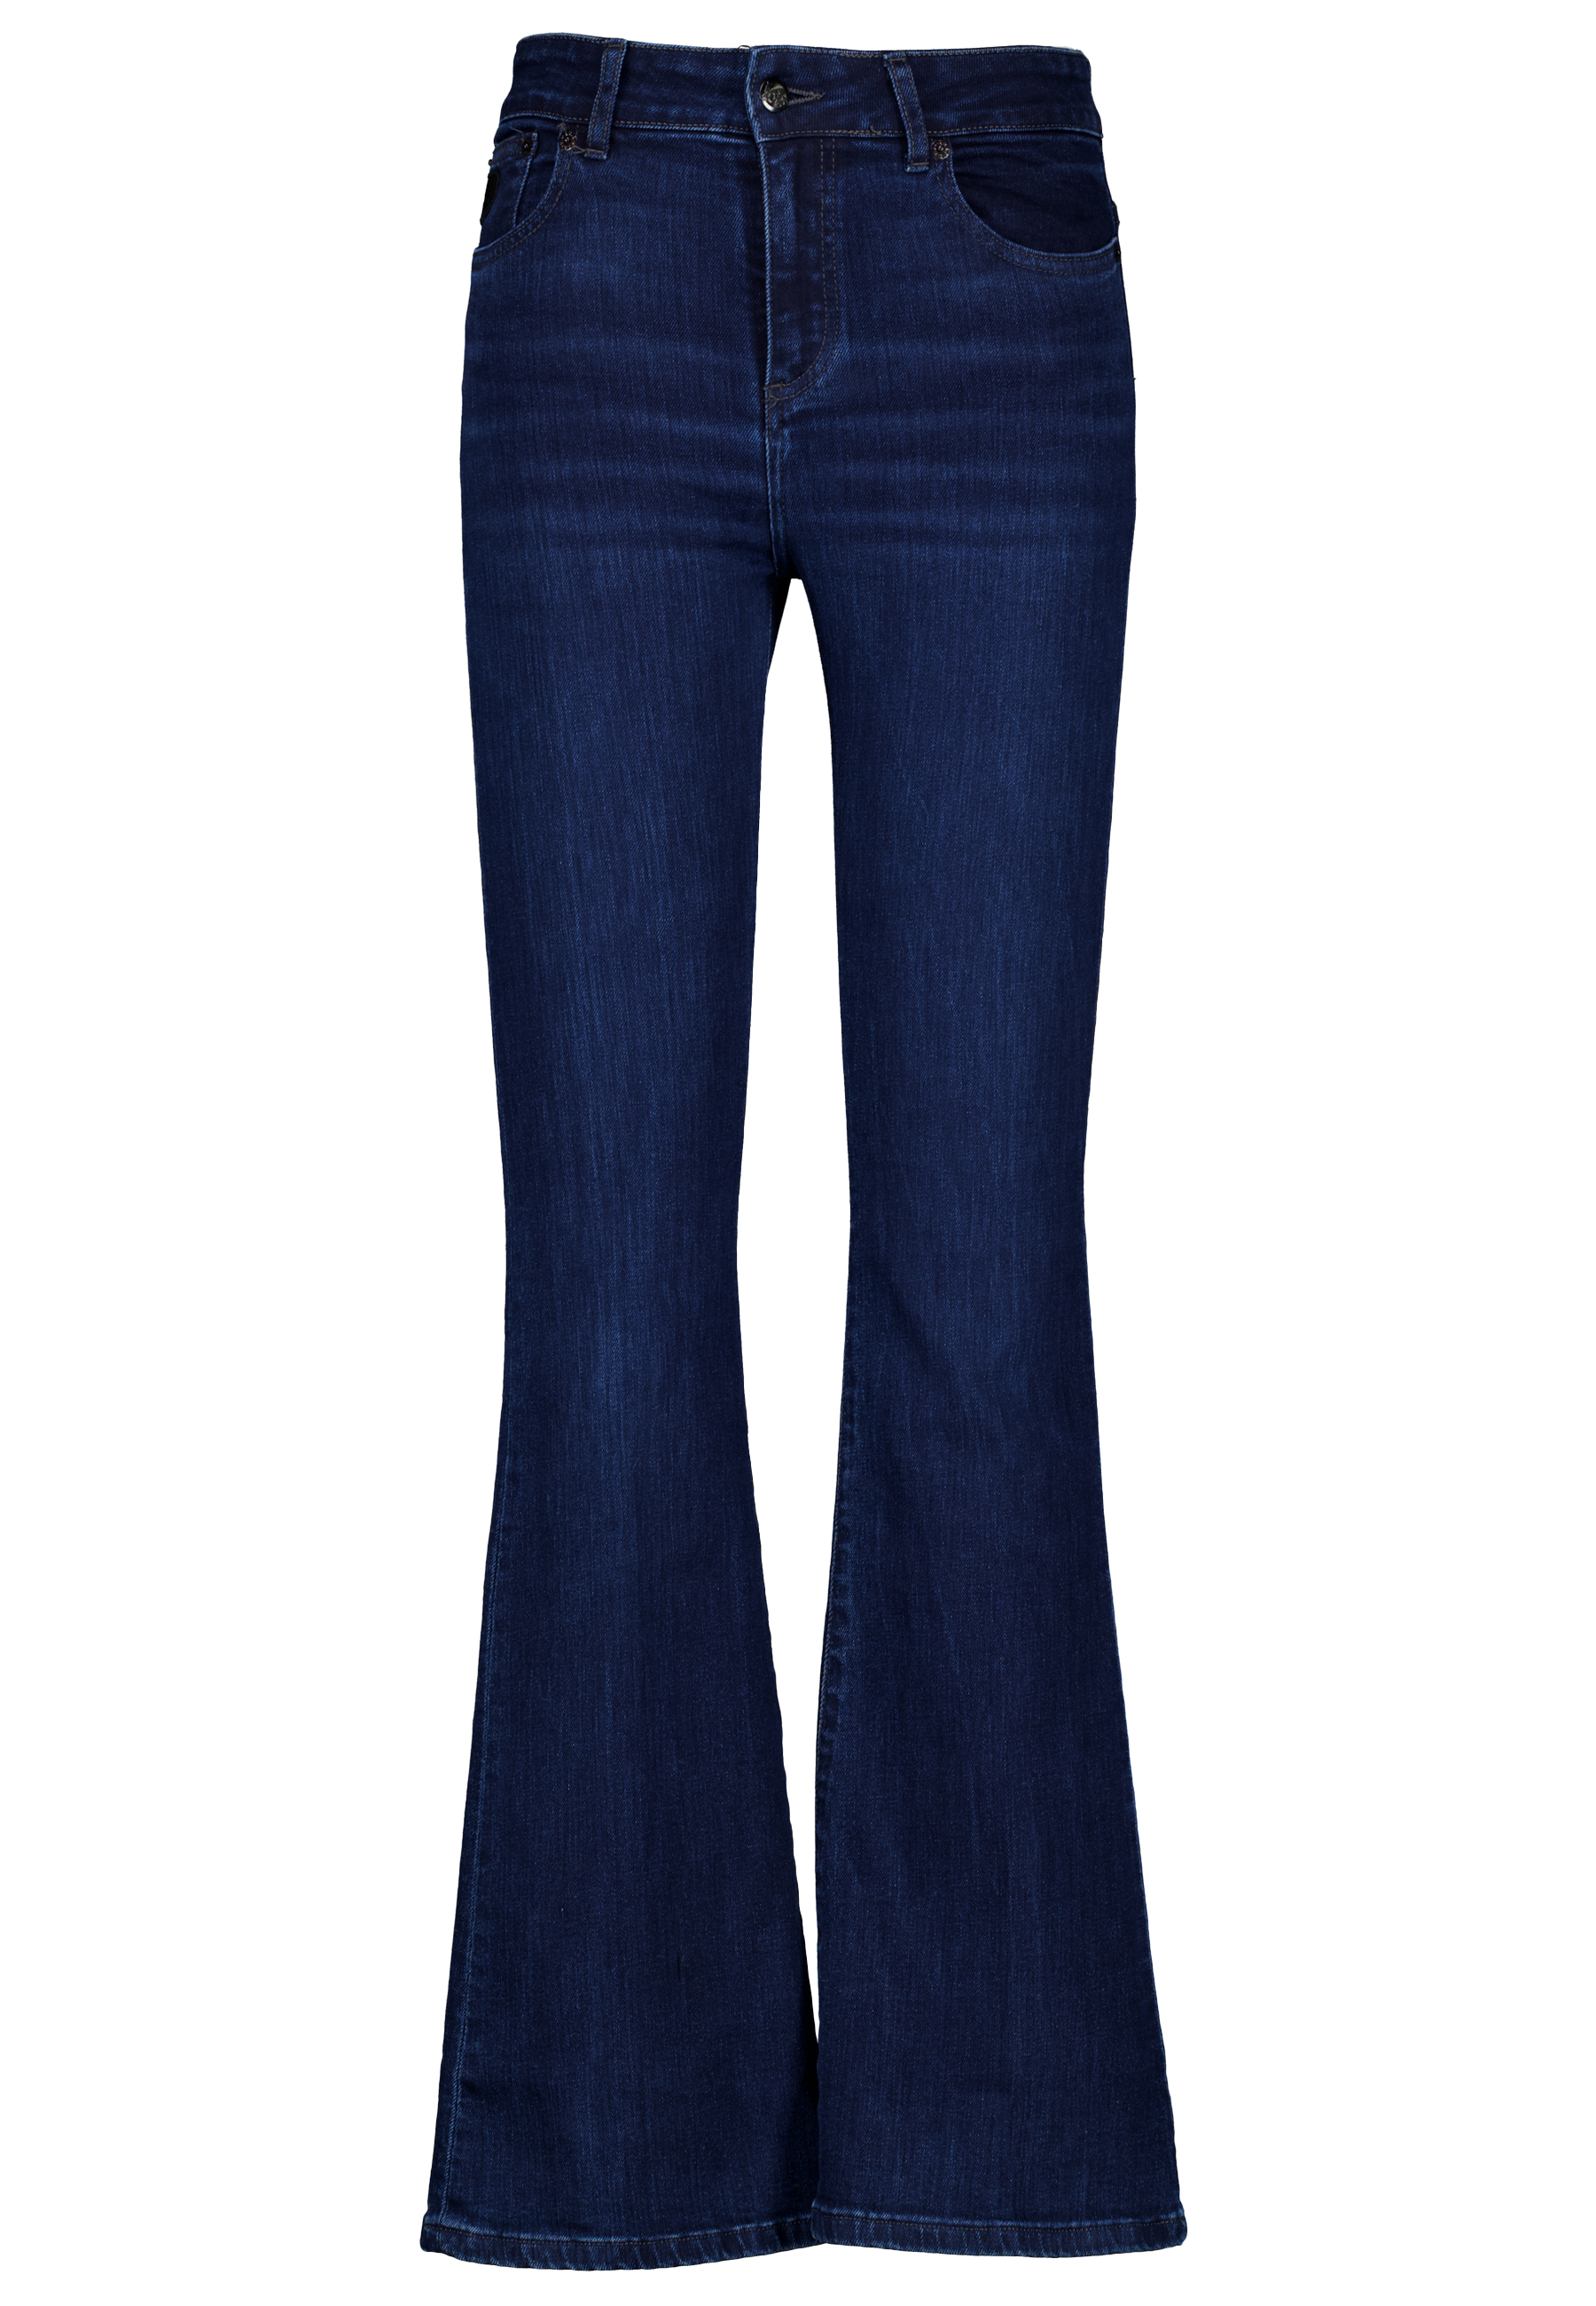 Lois jeans blauw Dames maat 31/32